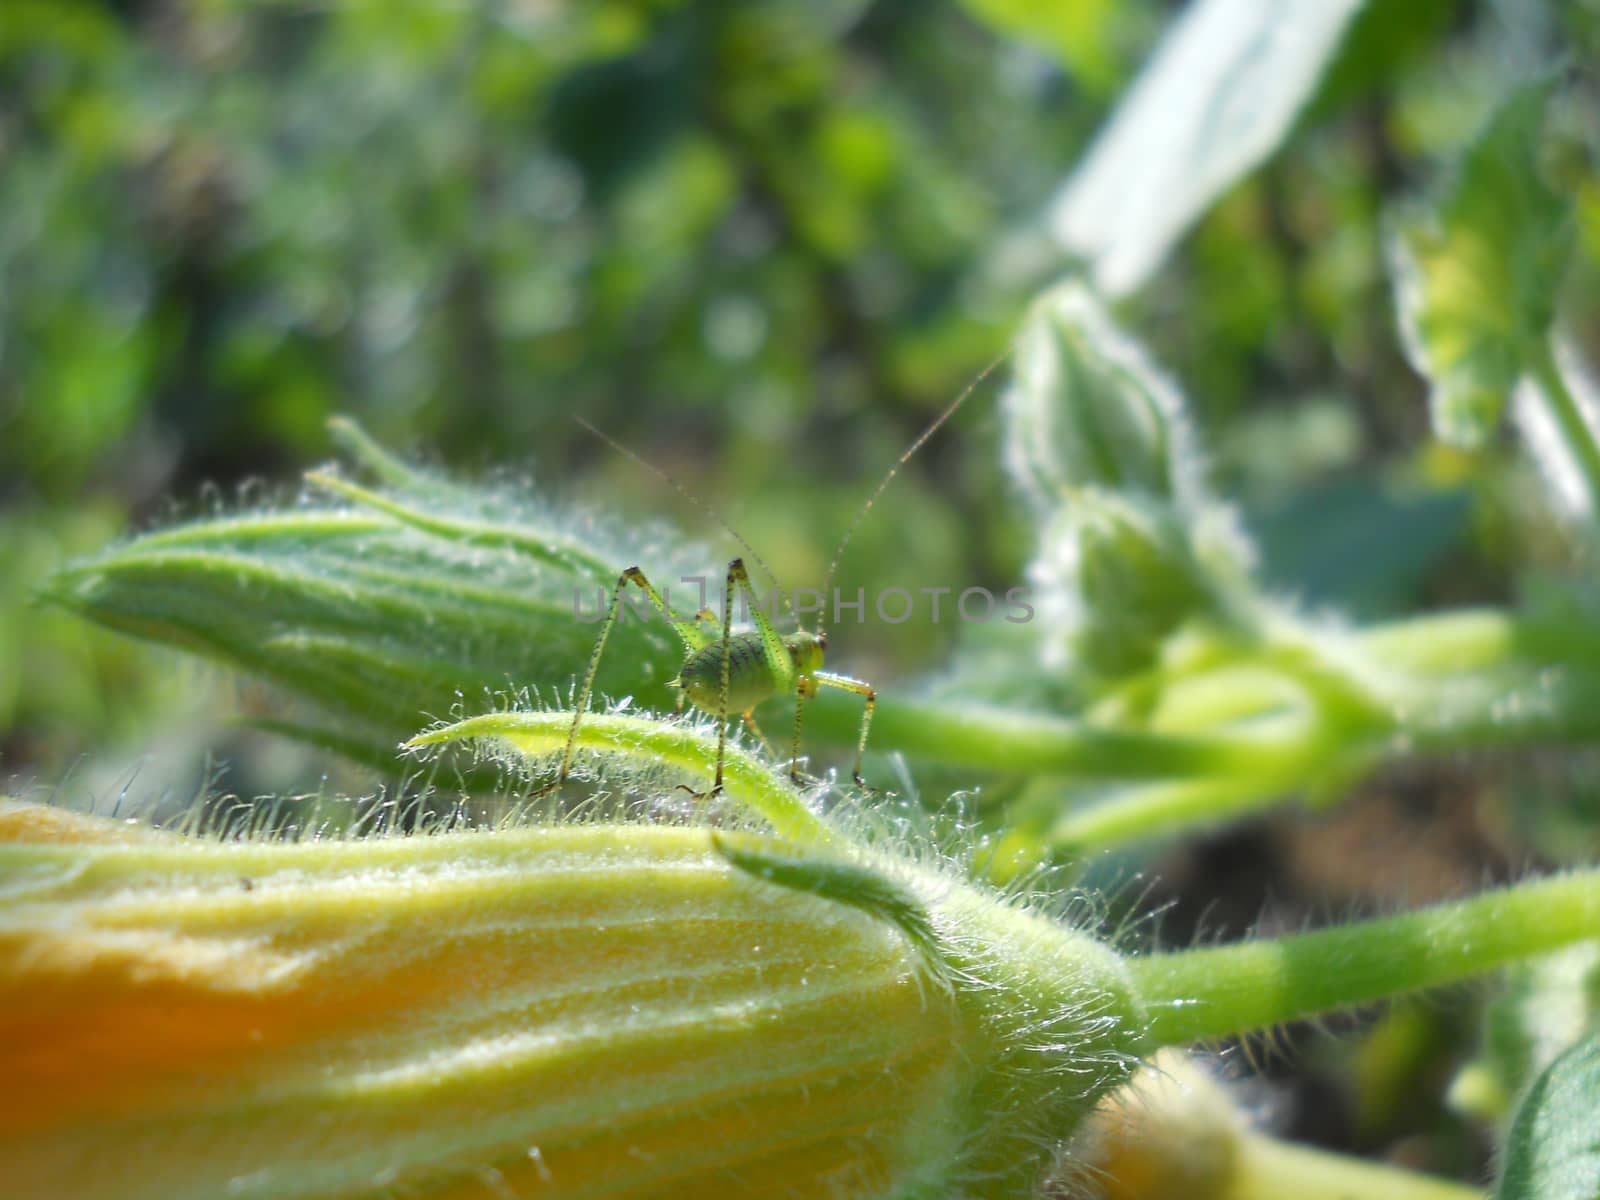 grasshopper on pumpkin flower by fadeinphotography